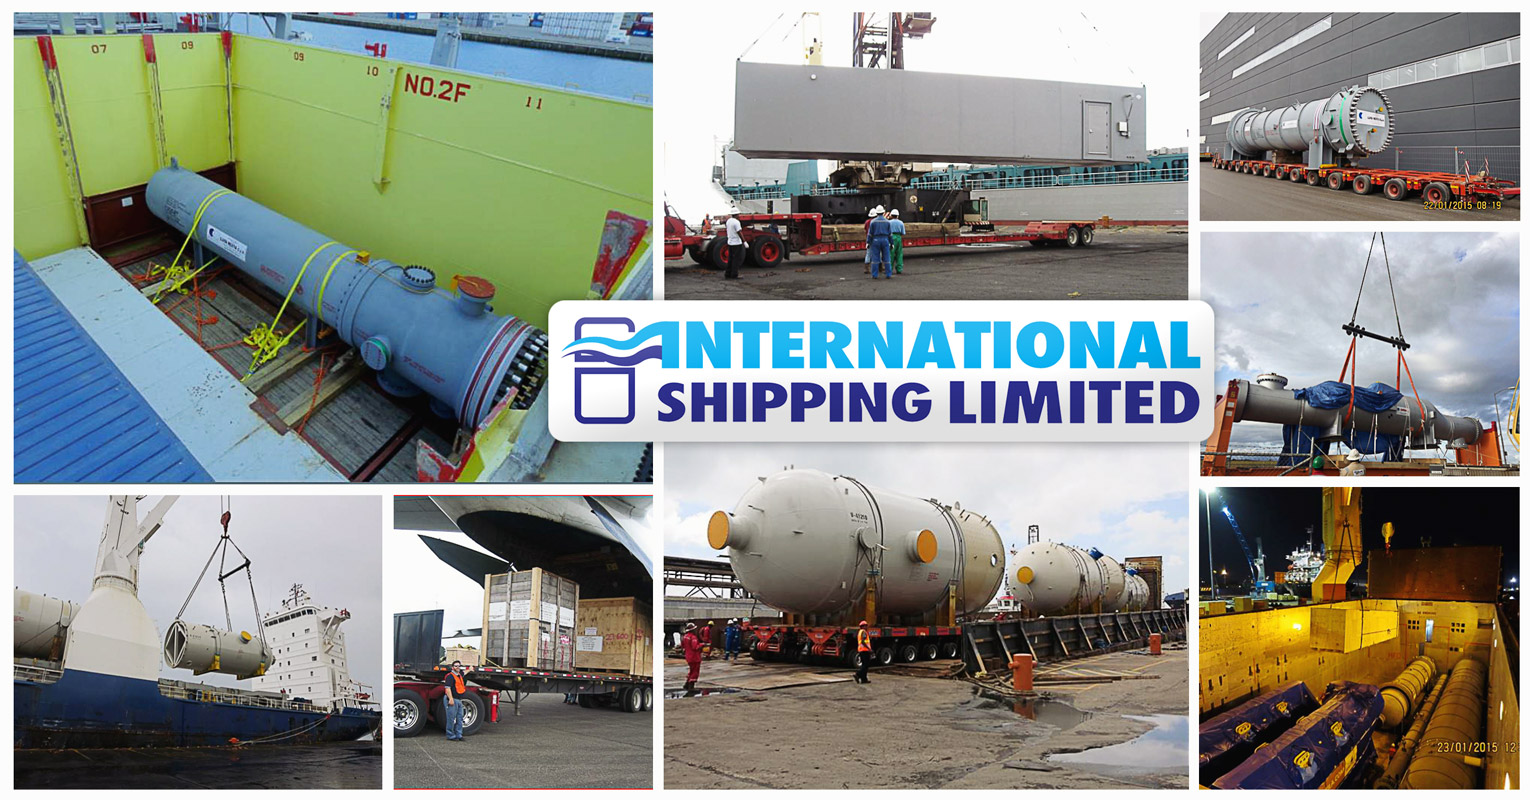 New member representing Trinidad and Tobago – International Shipping Limited